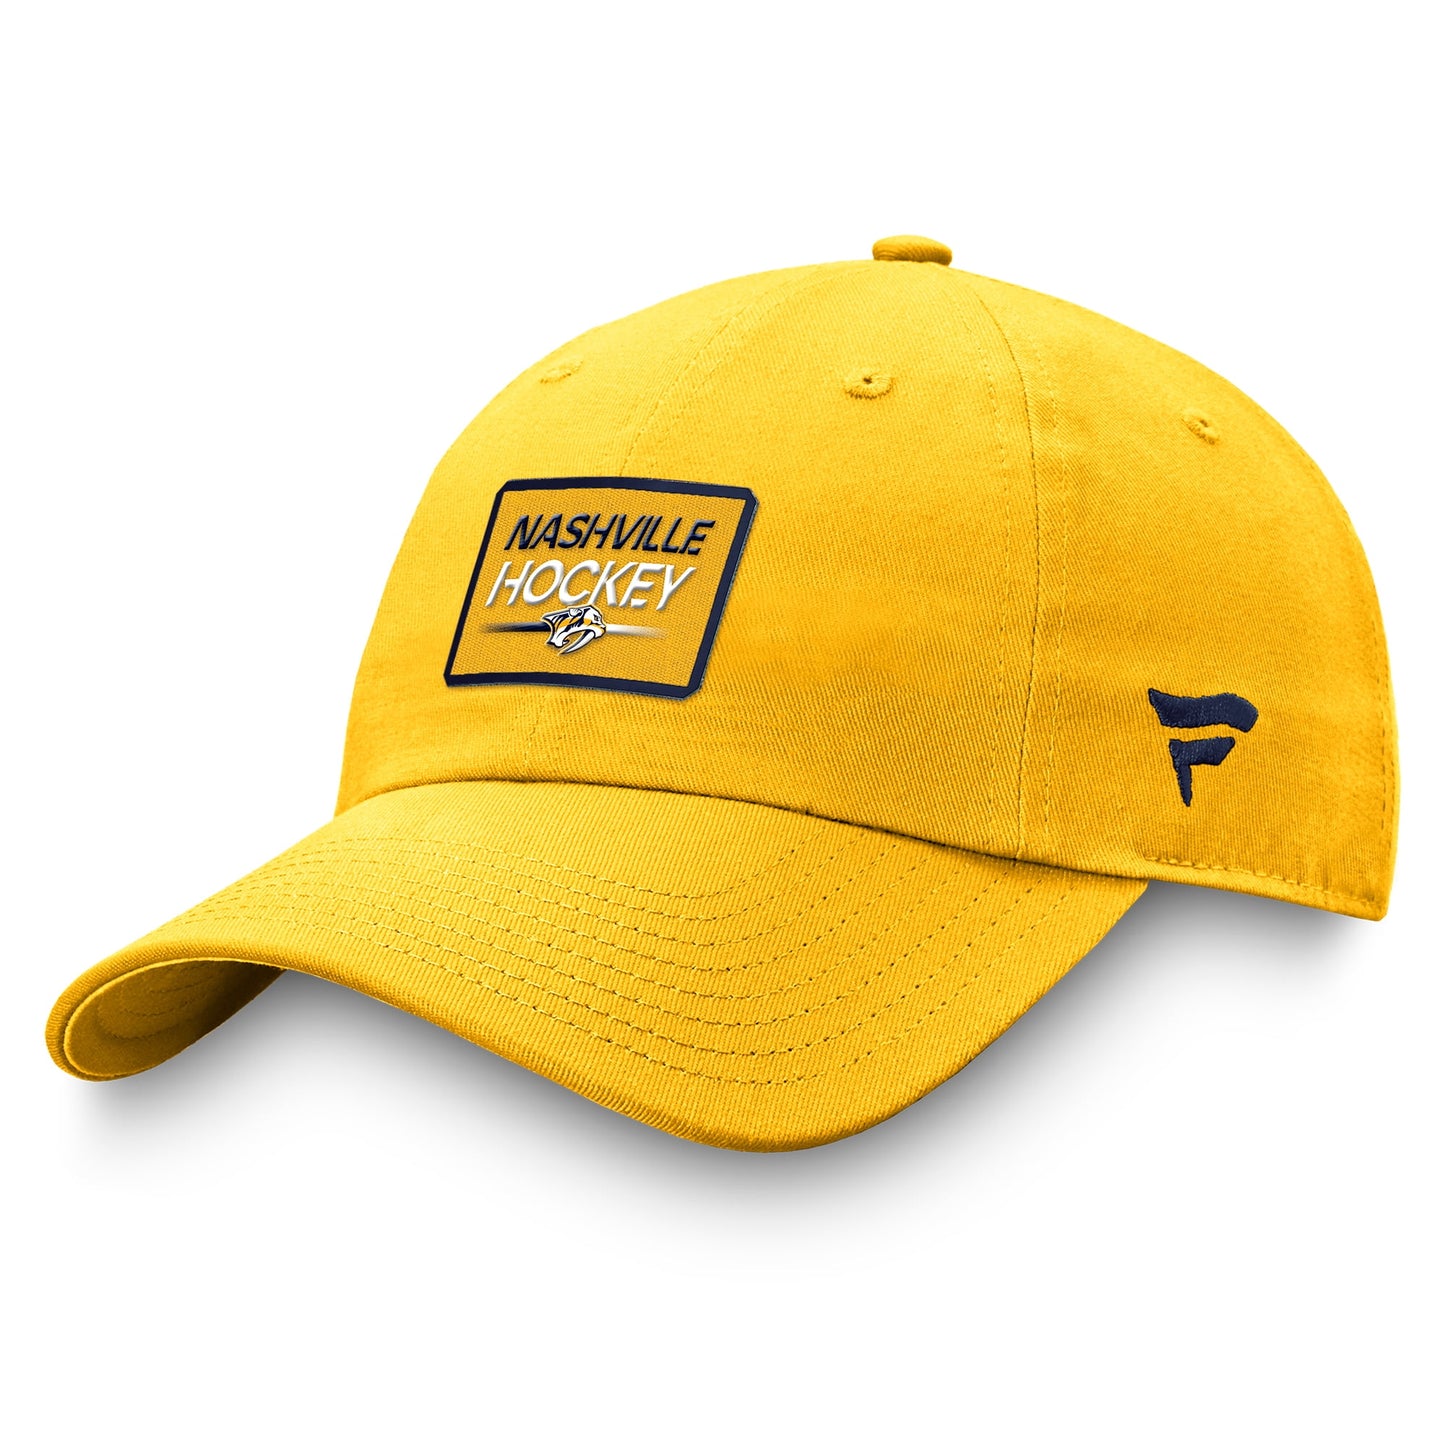 Men's Fanatics Branded  Gold Nashville Predators Authentic Pro Prime Adjustable Hat